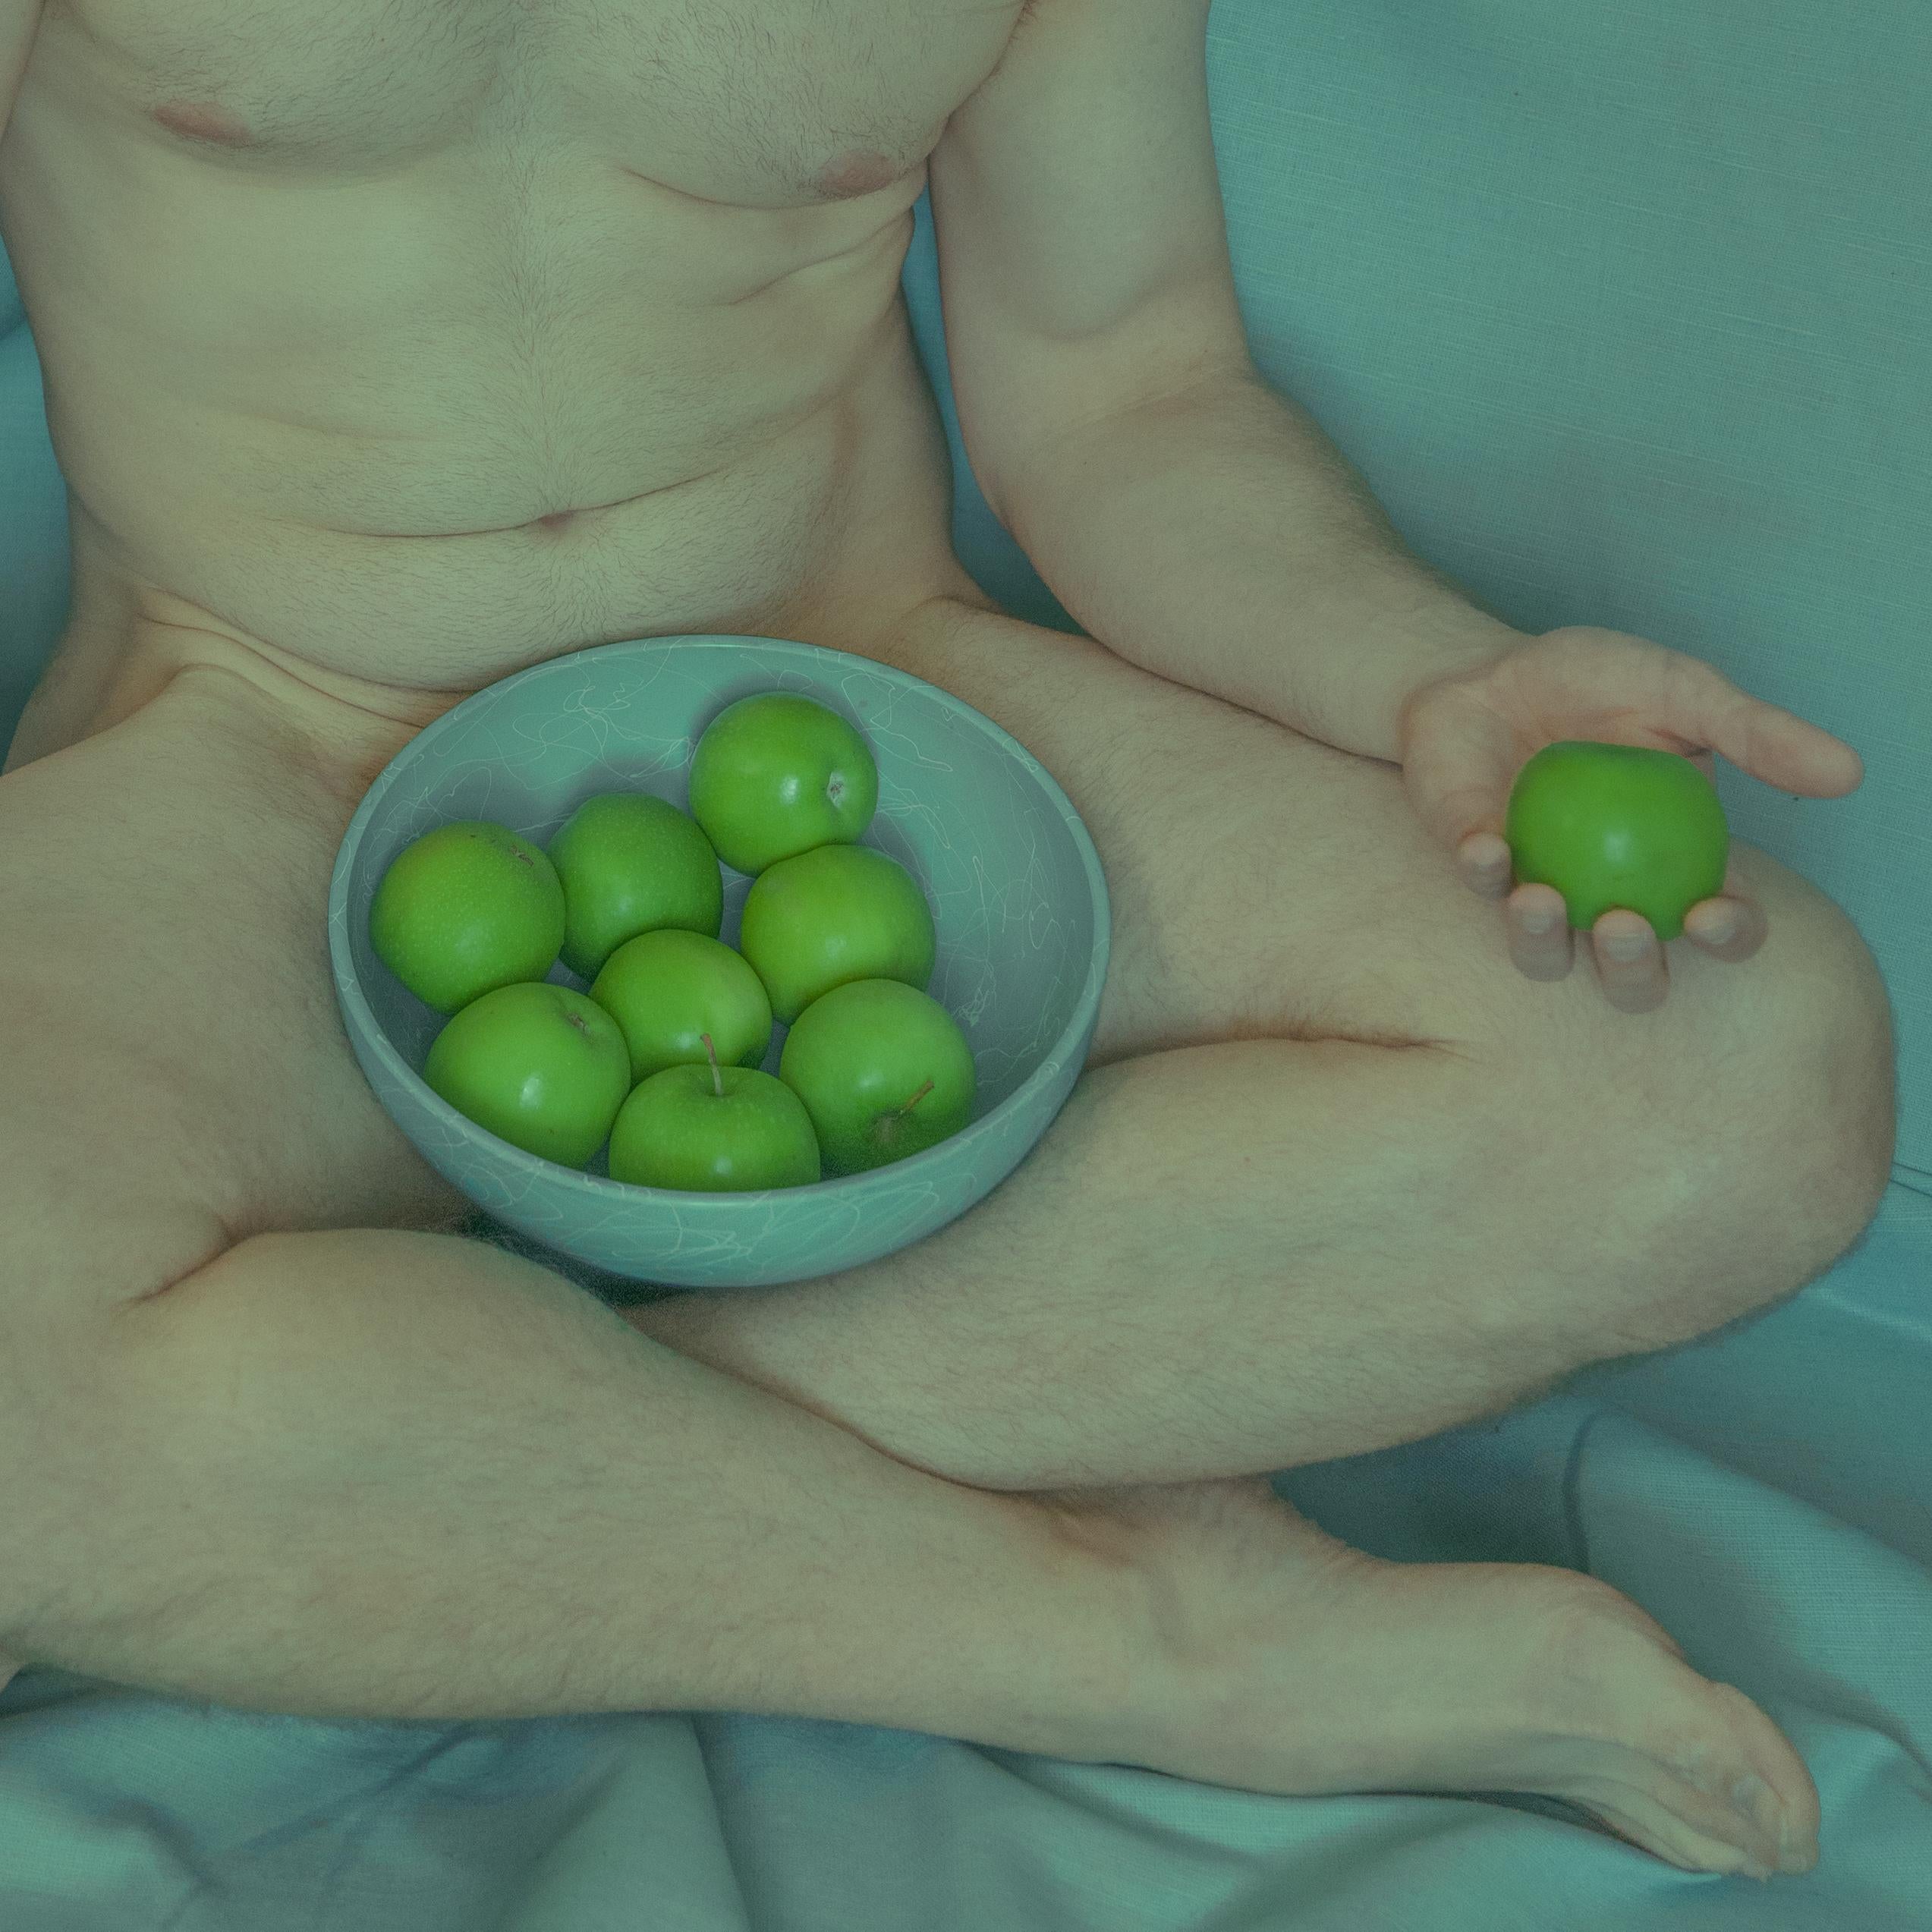 David Pugh Still-Life Photograph - Untitled (Self Portrait, Nude, Apples, Bowl, Green, Teal, Skin, Power, Desire)